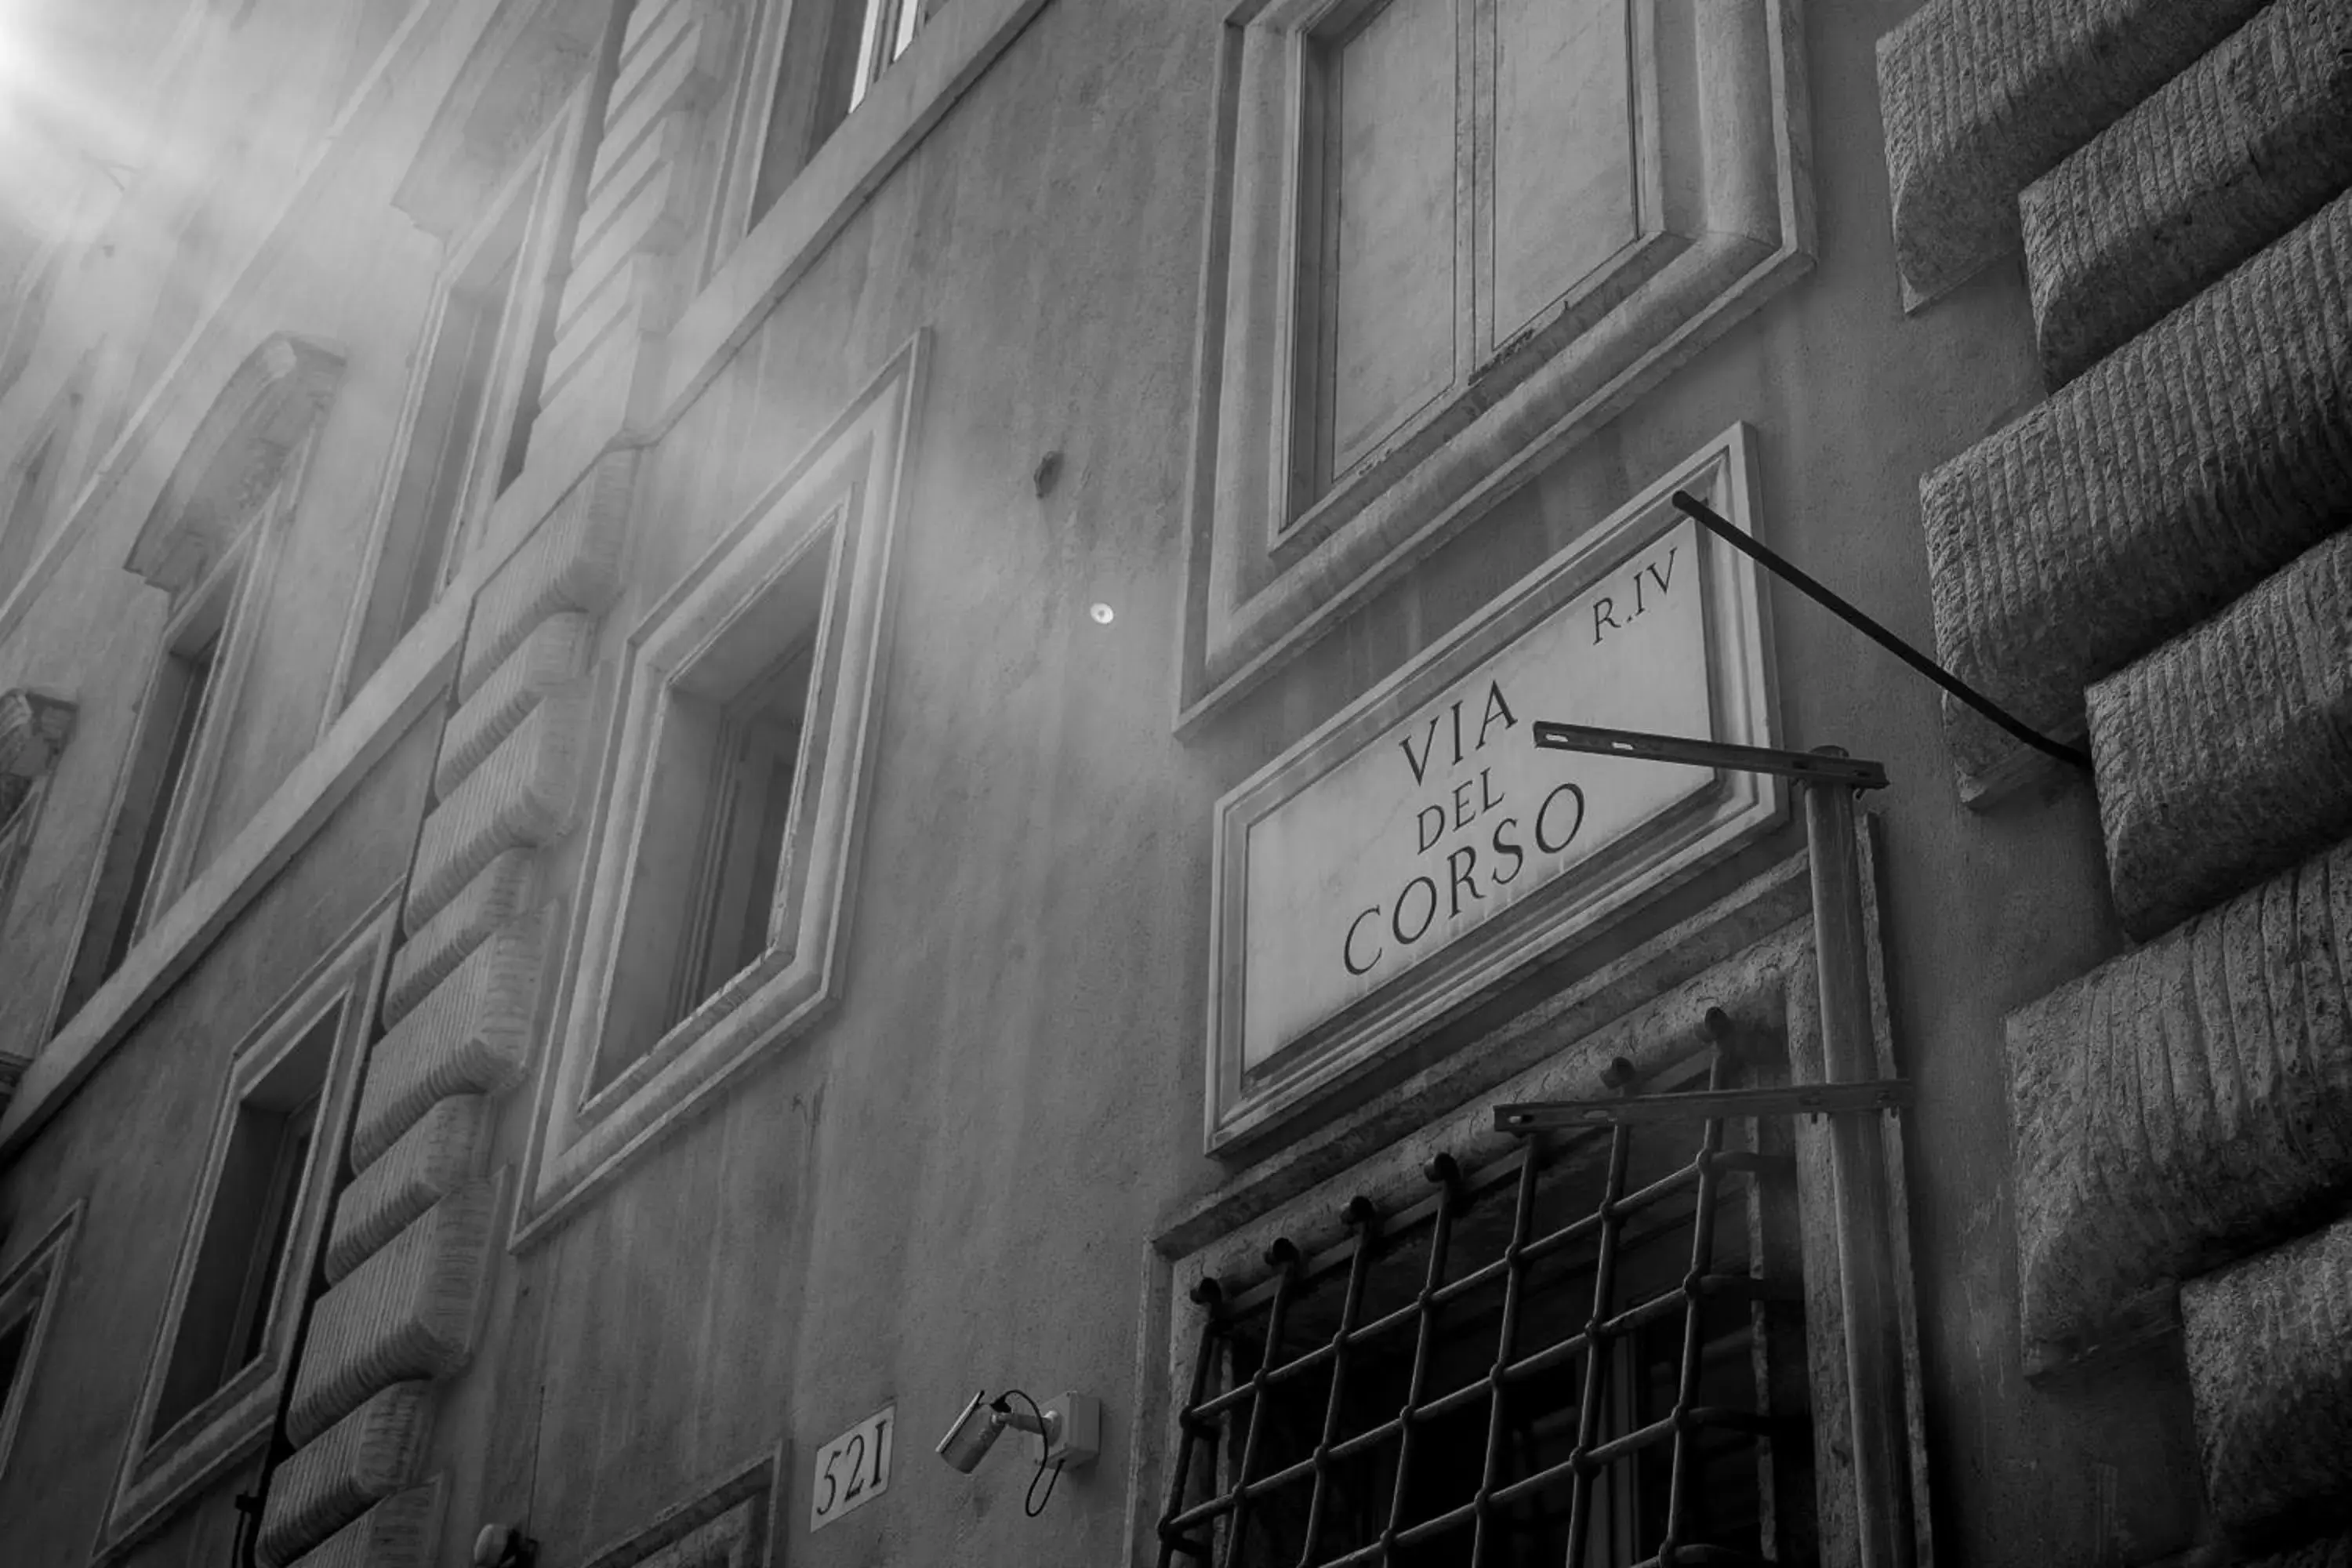 Facade/entrance in Il Corso Comfort Rooms